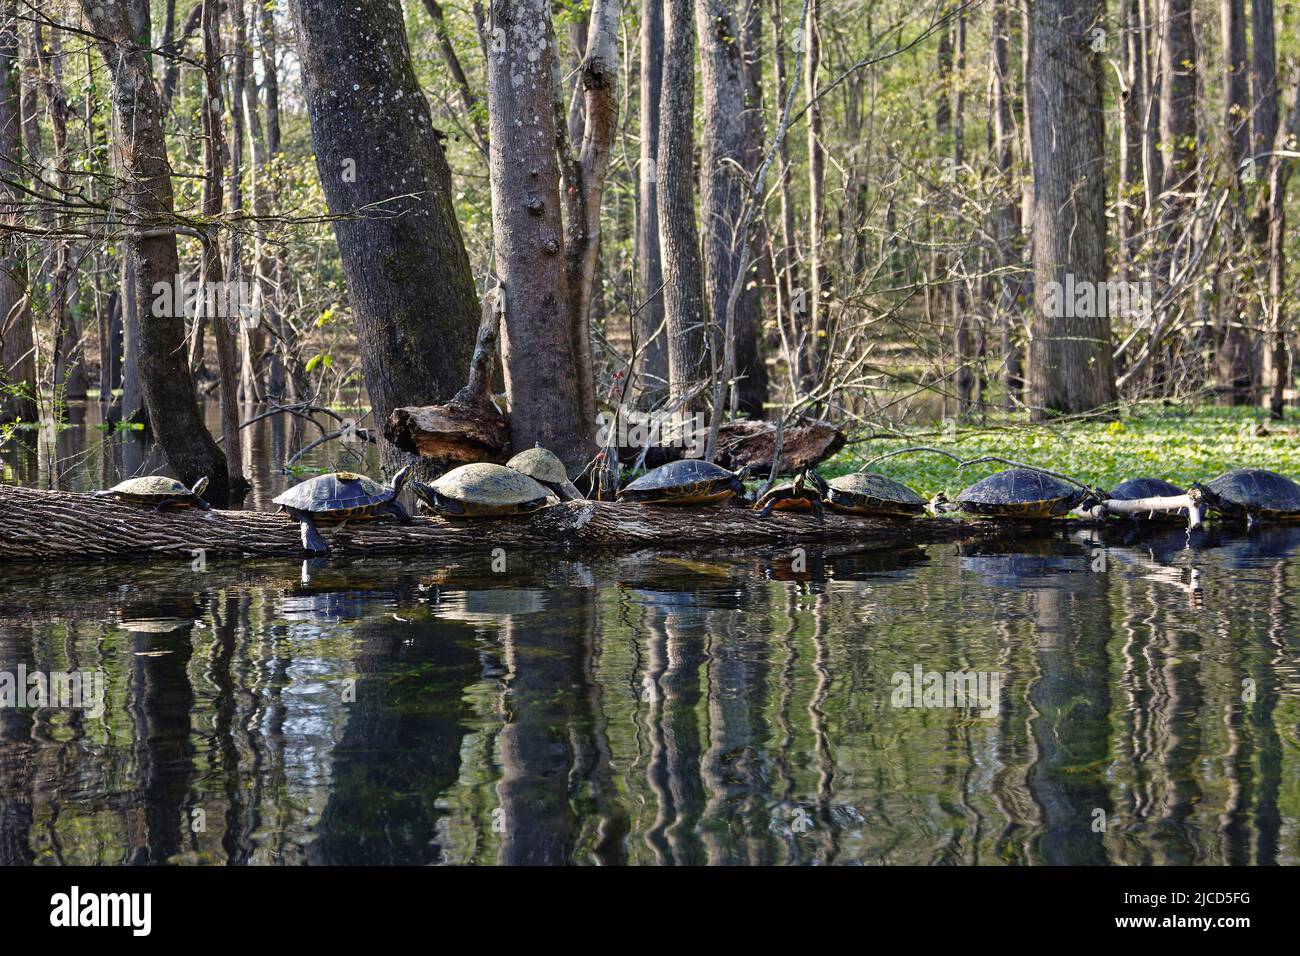 10 turtles, resting on log, marine wildlife, animal, toothless reptile, water, nature, woods, Testudines, Ichetucknee Springs State Park, Florida, For Stock Photo